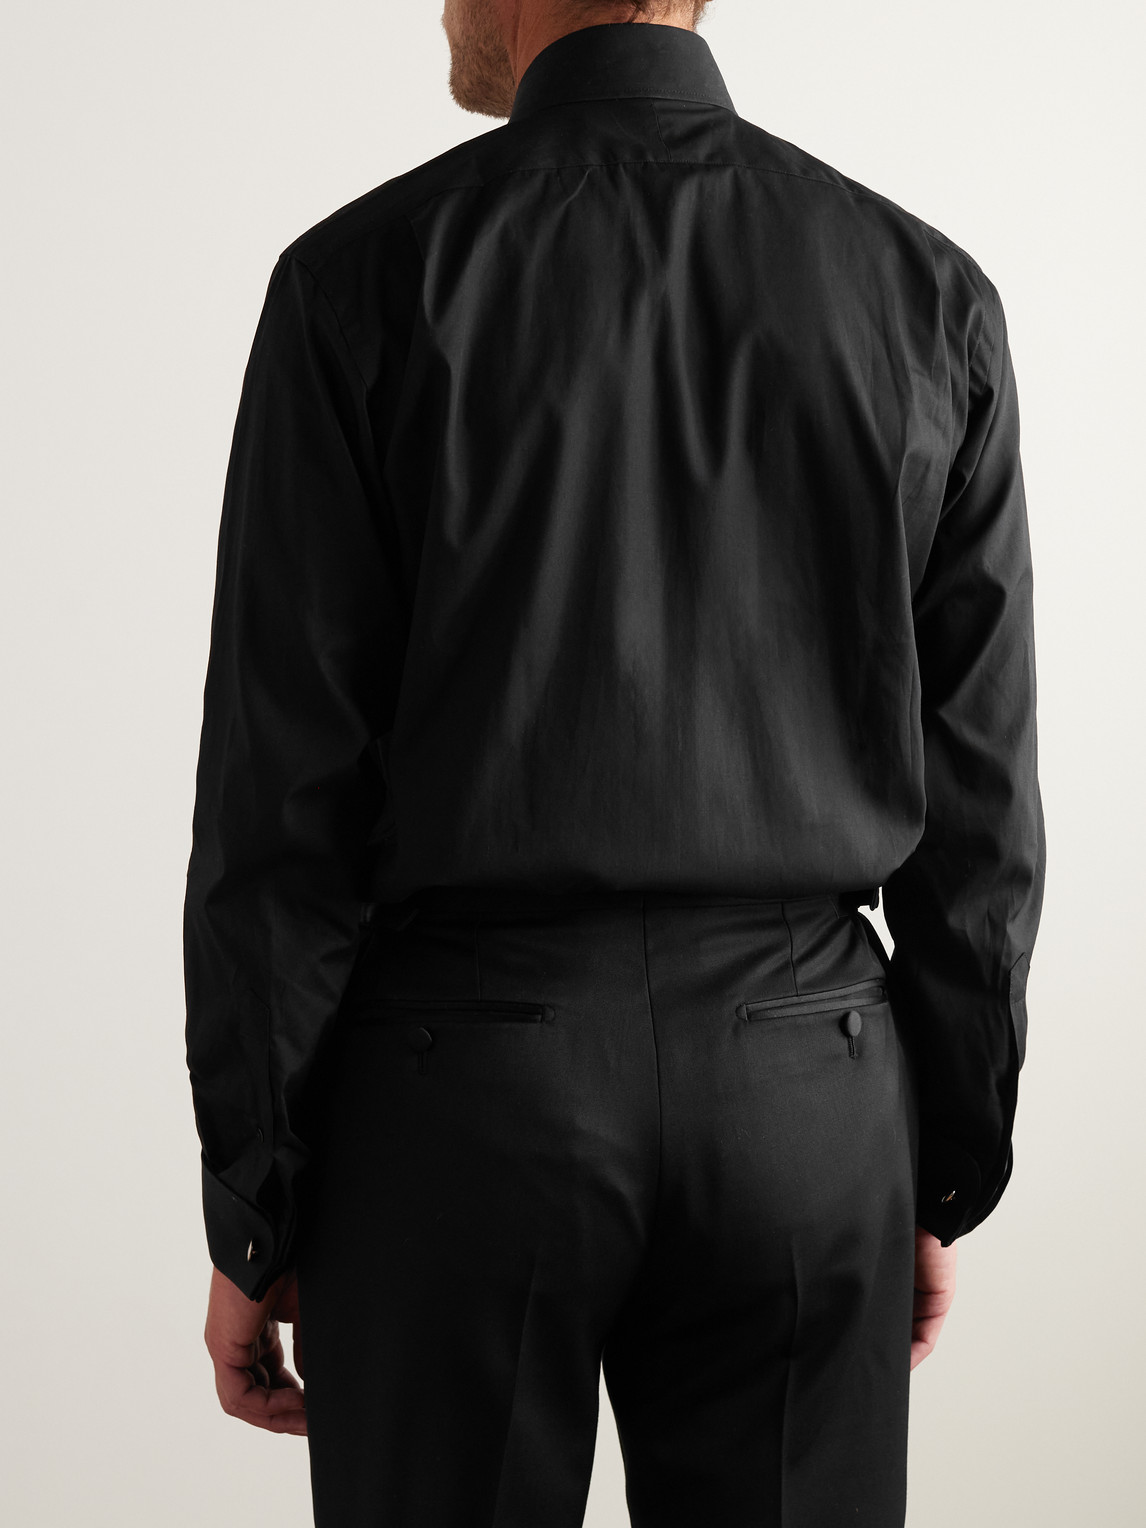 Shop Favourbrook Cutaway-collar Bib-front Double-cuff Cotton-poplin Shirt In Black